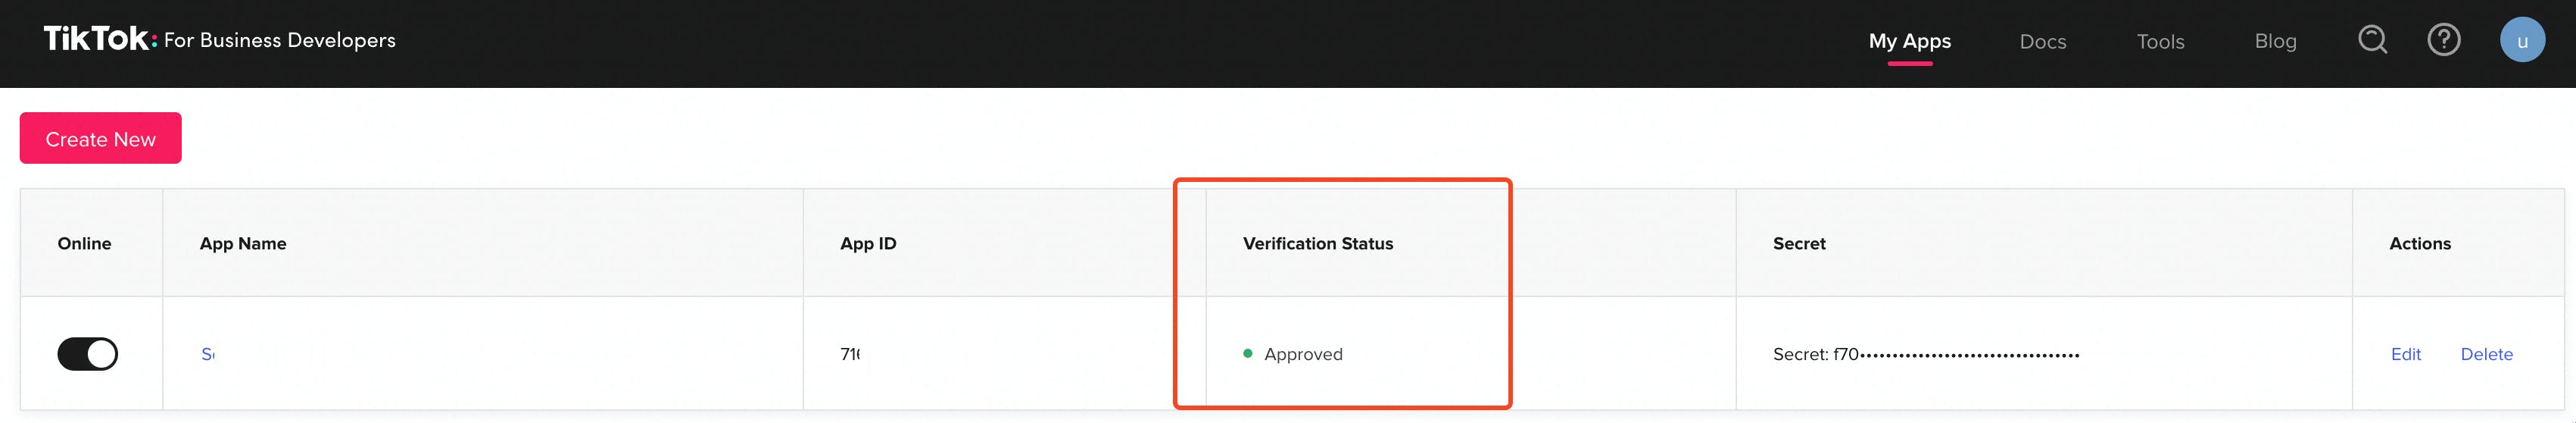 Verification status - approved status